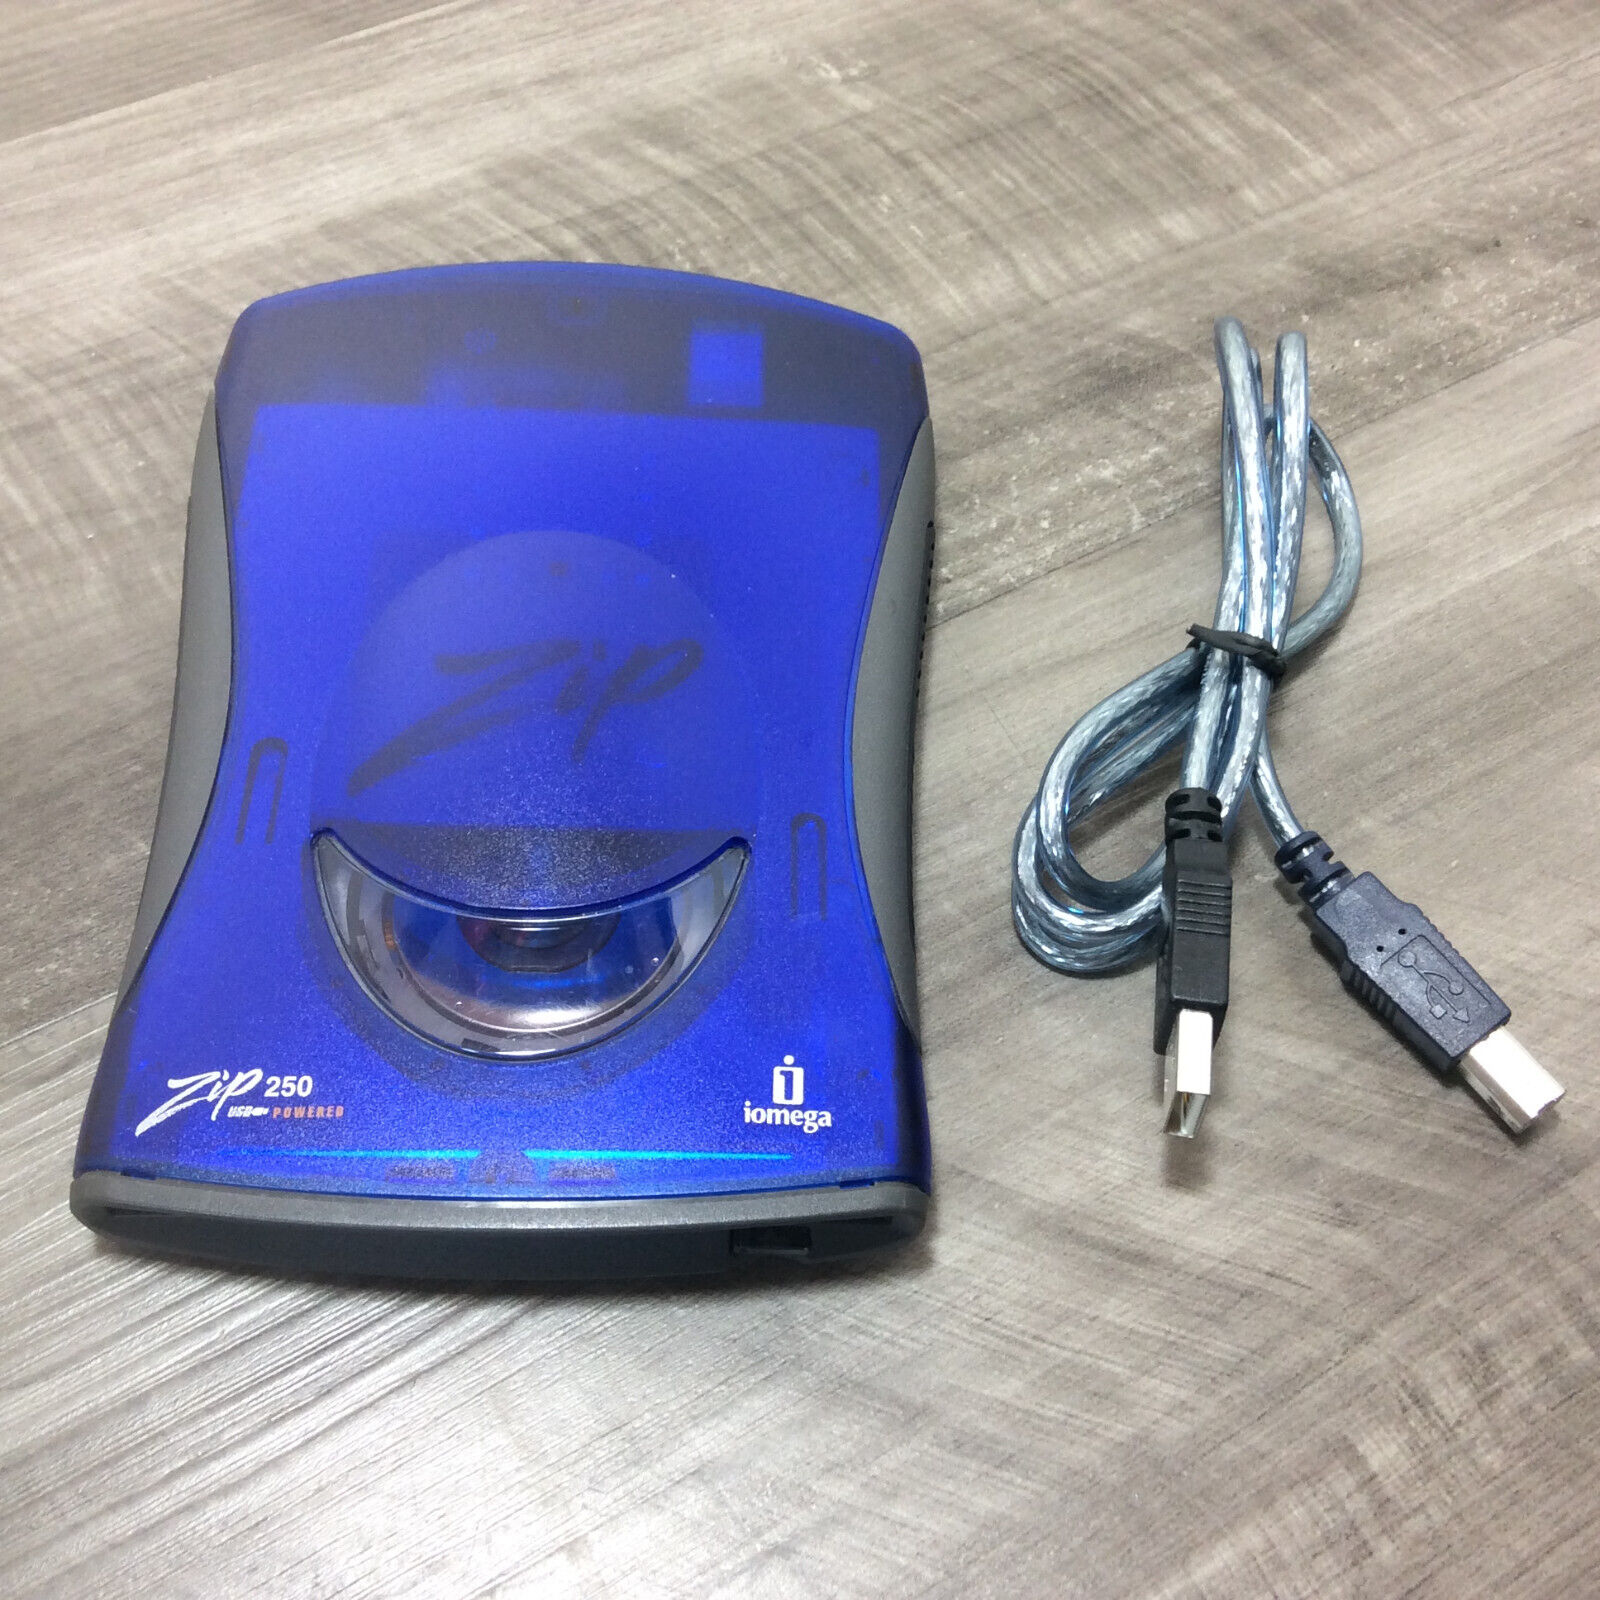 Iomega Zip 250 250MB USB Drive Z250USBPCMBP USB Powered Blue - Works Nicely